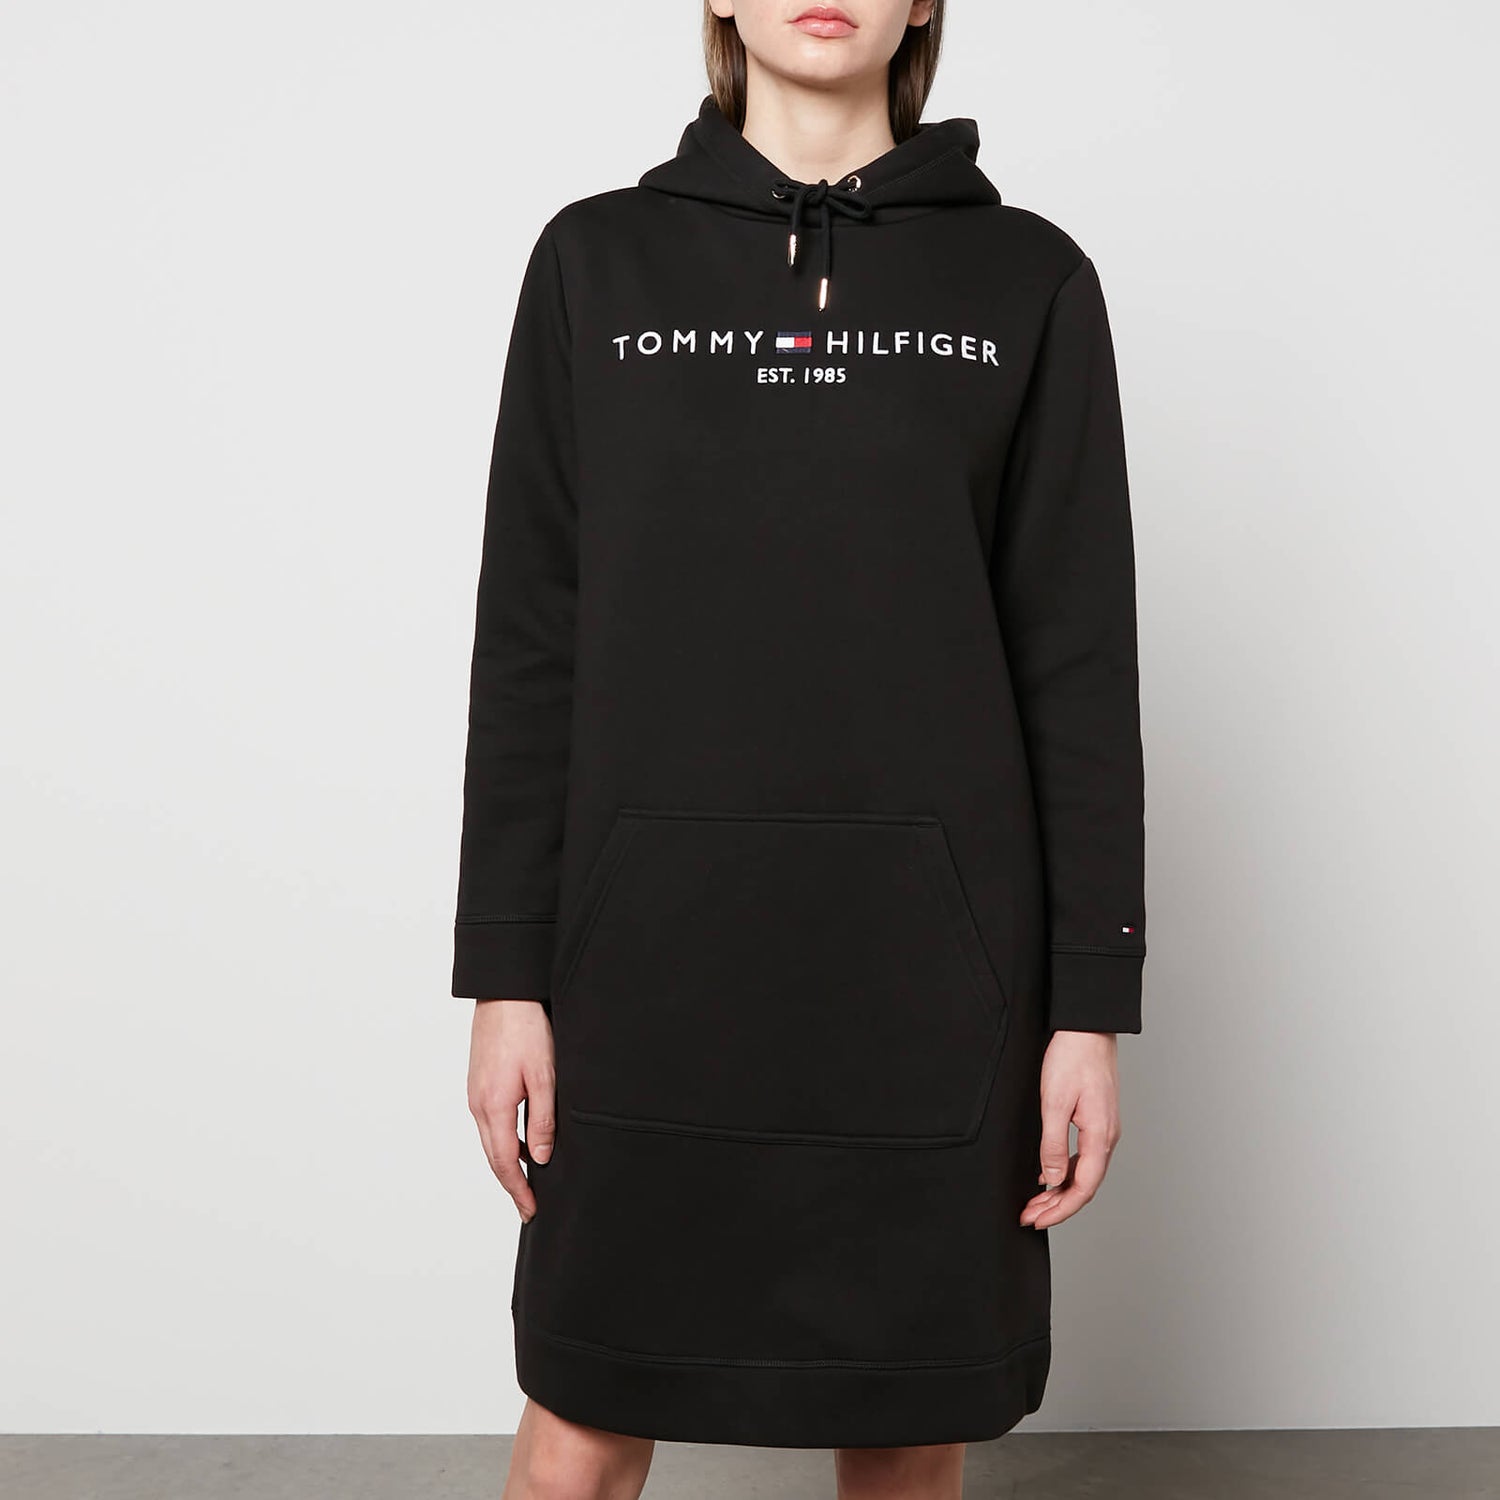 Tommy Hilfiger Women's Regular Hilfiger Hoodie Dress LS - Black